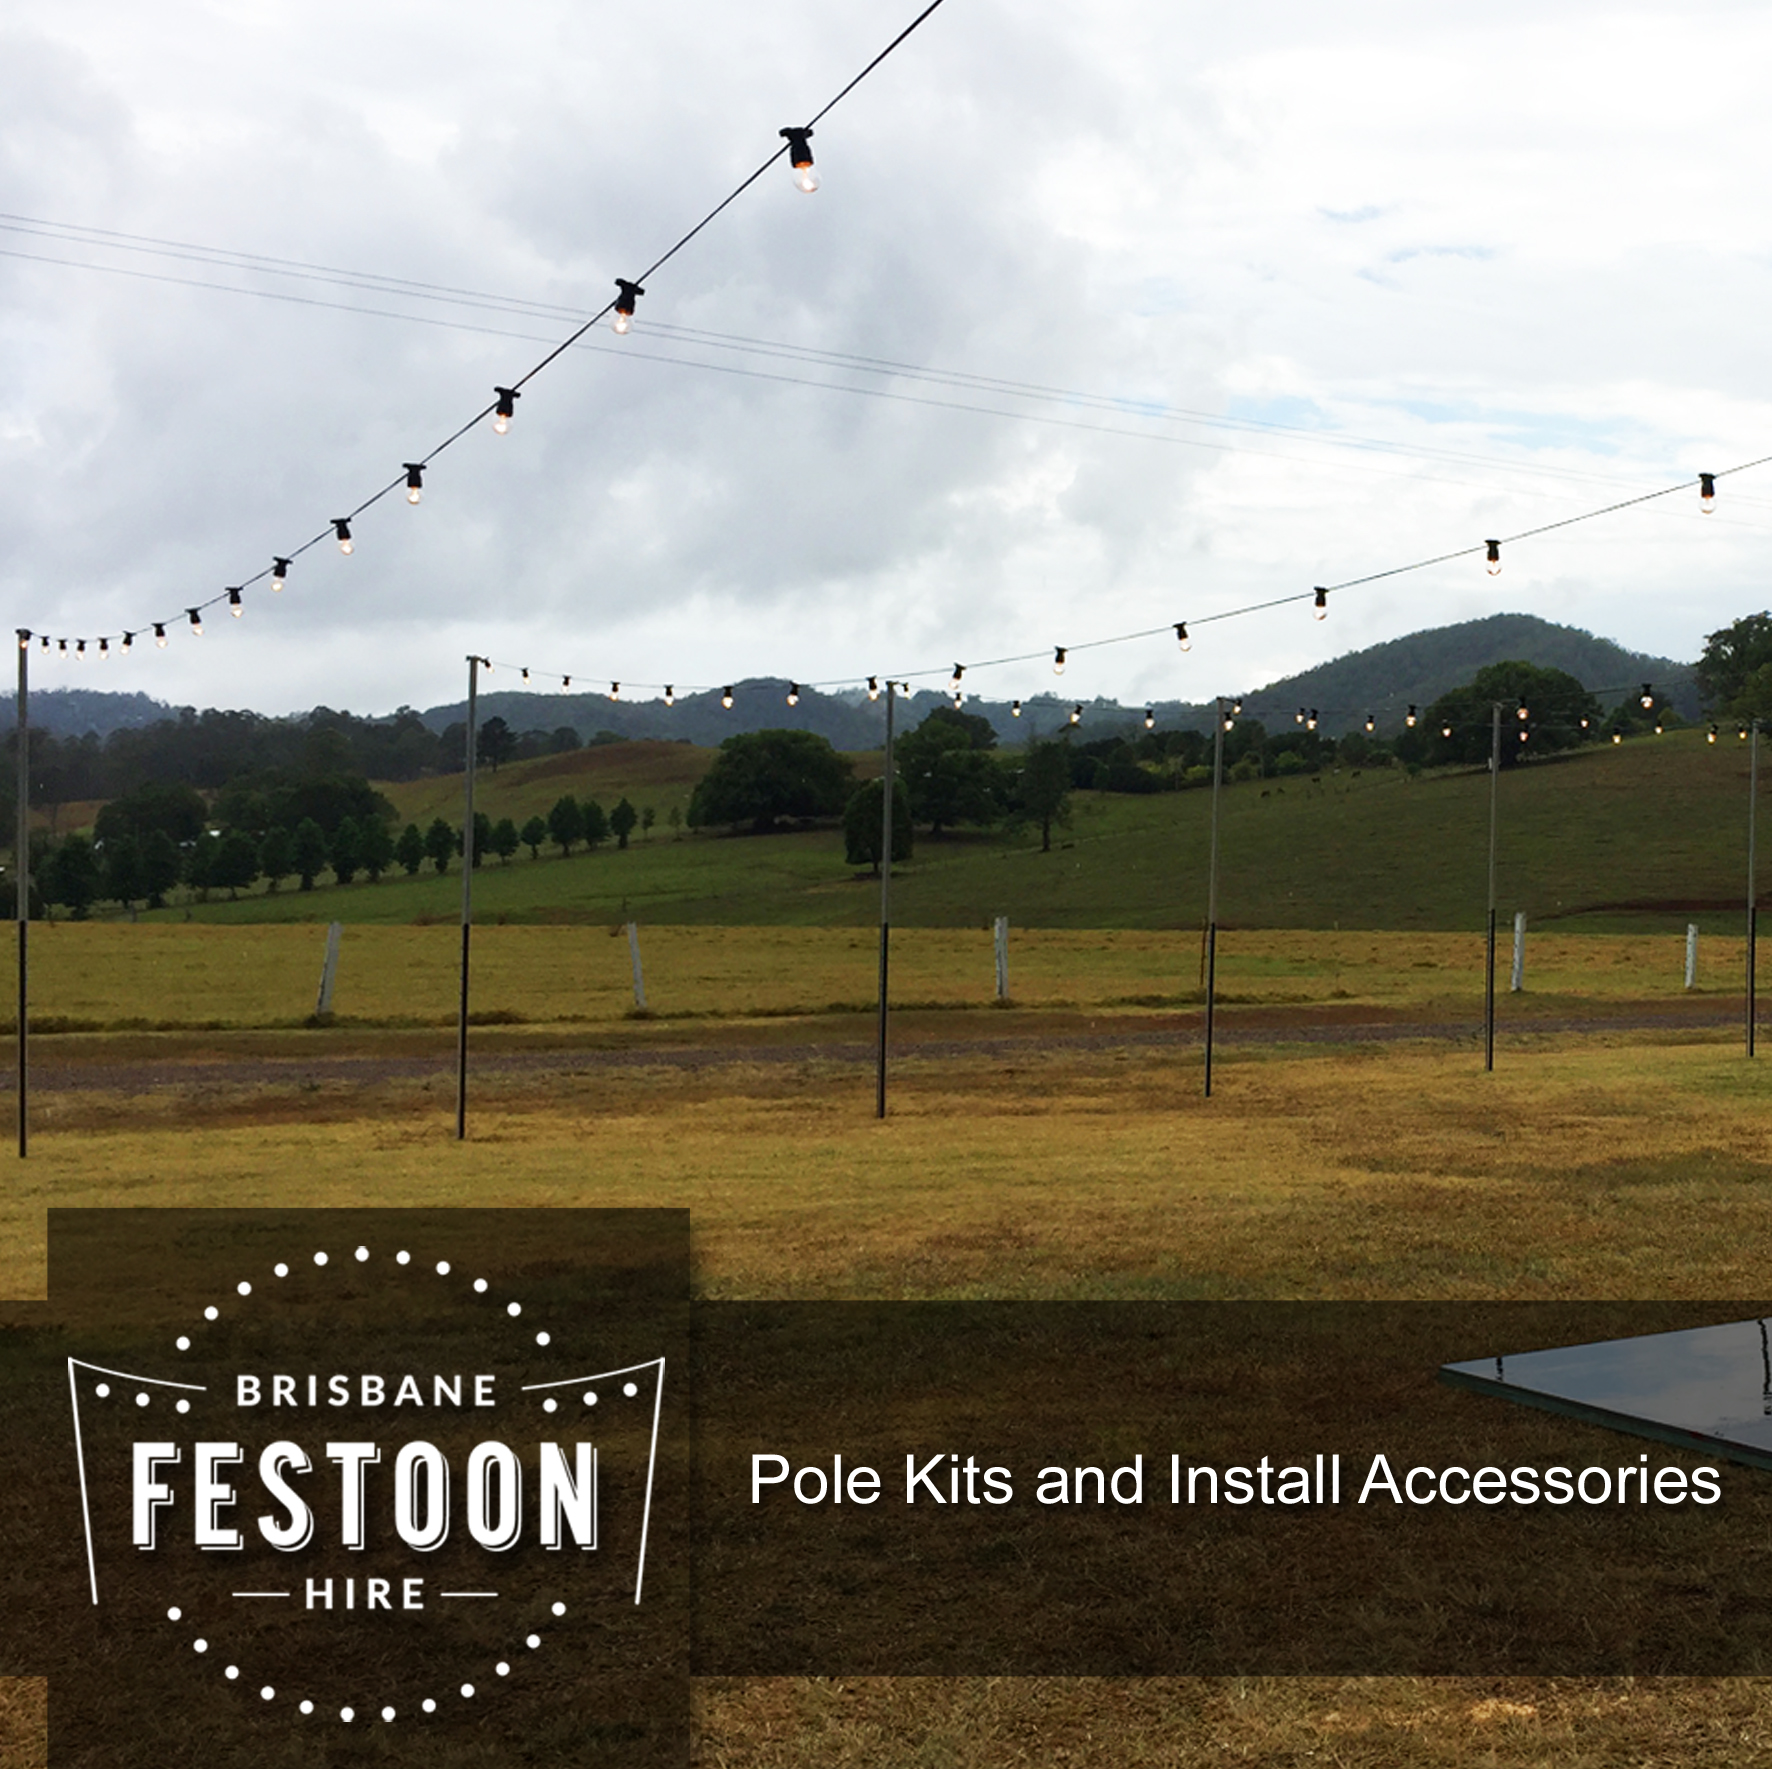 Brisbane Festoon Hire - Pole Kits and Install Accessories 1.jpg